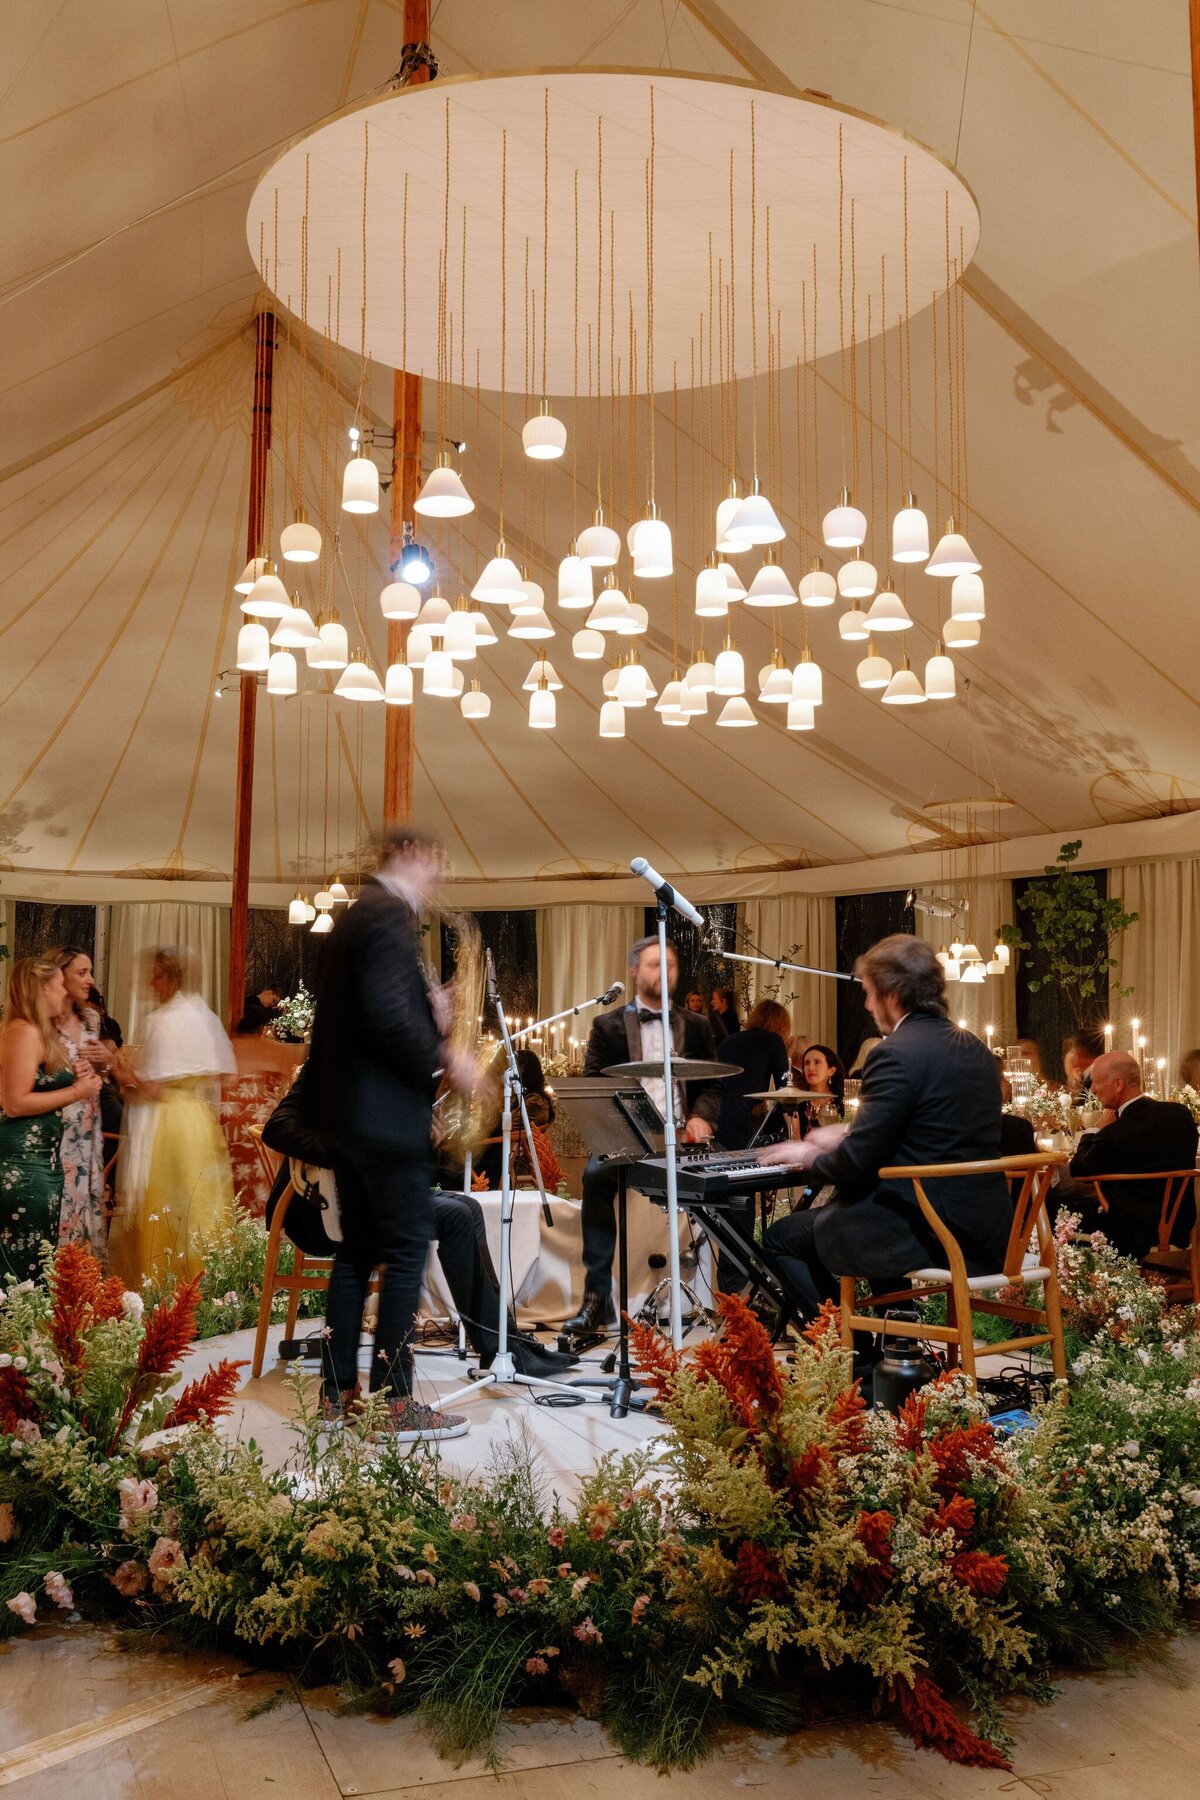 wedding band playing under chandelier